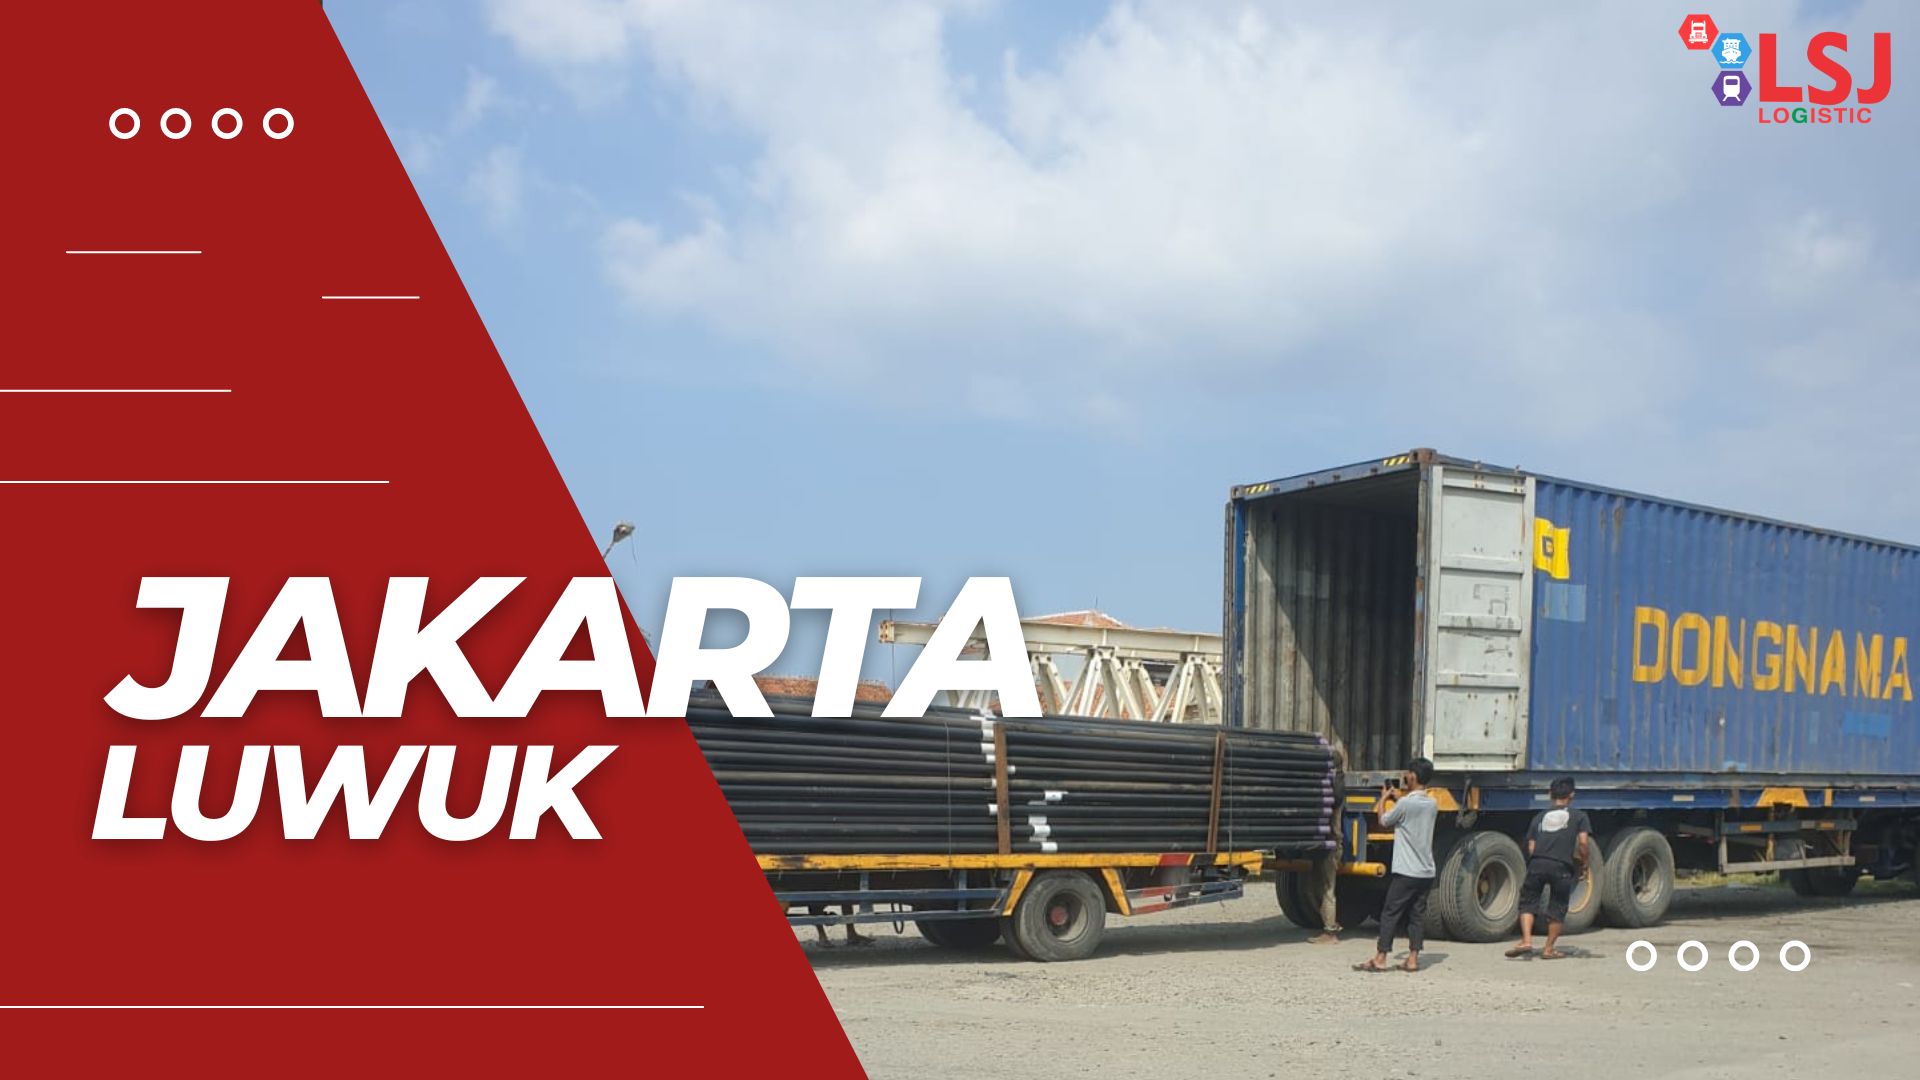 Harga Pengiriman Container Jakarta Luwuk